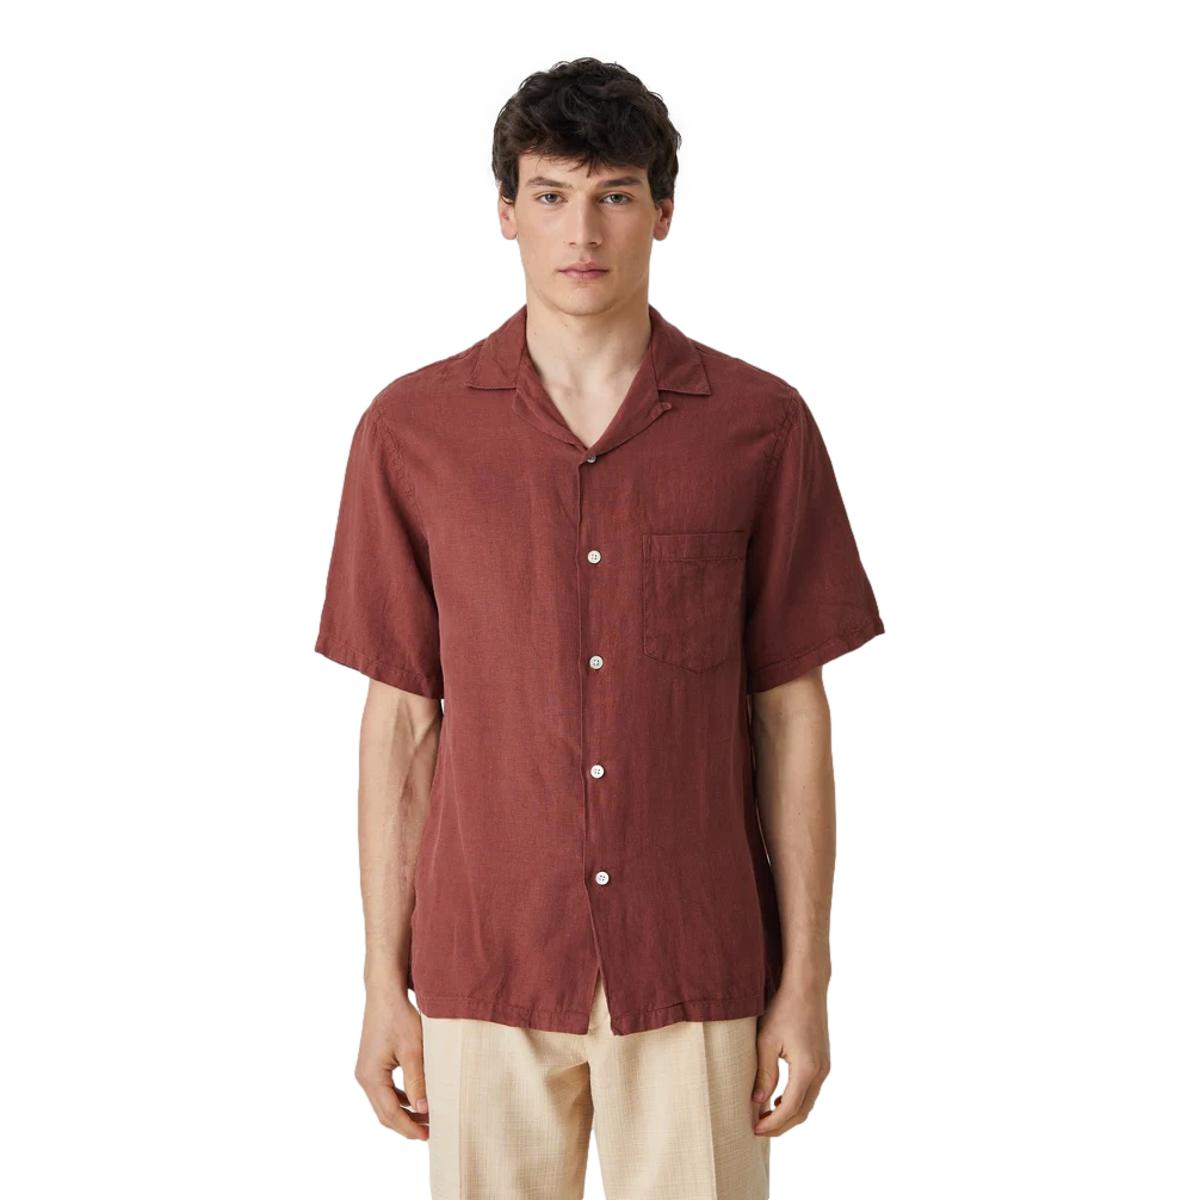 Linen Camp Shirt Bordeaux - Shirts